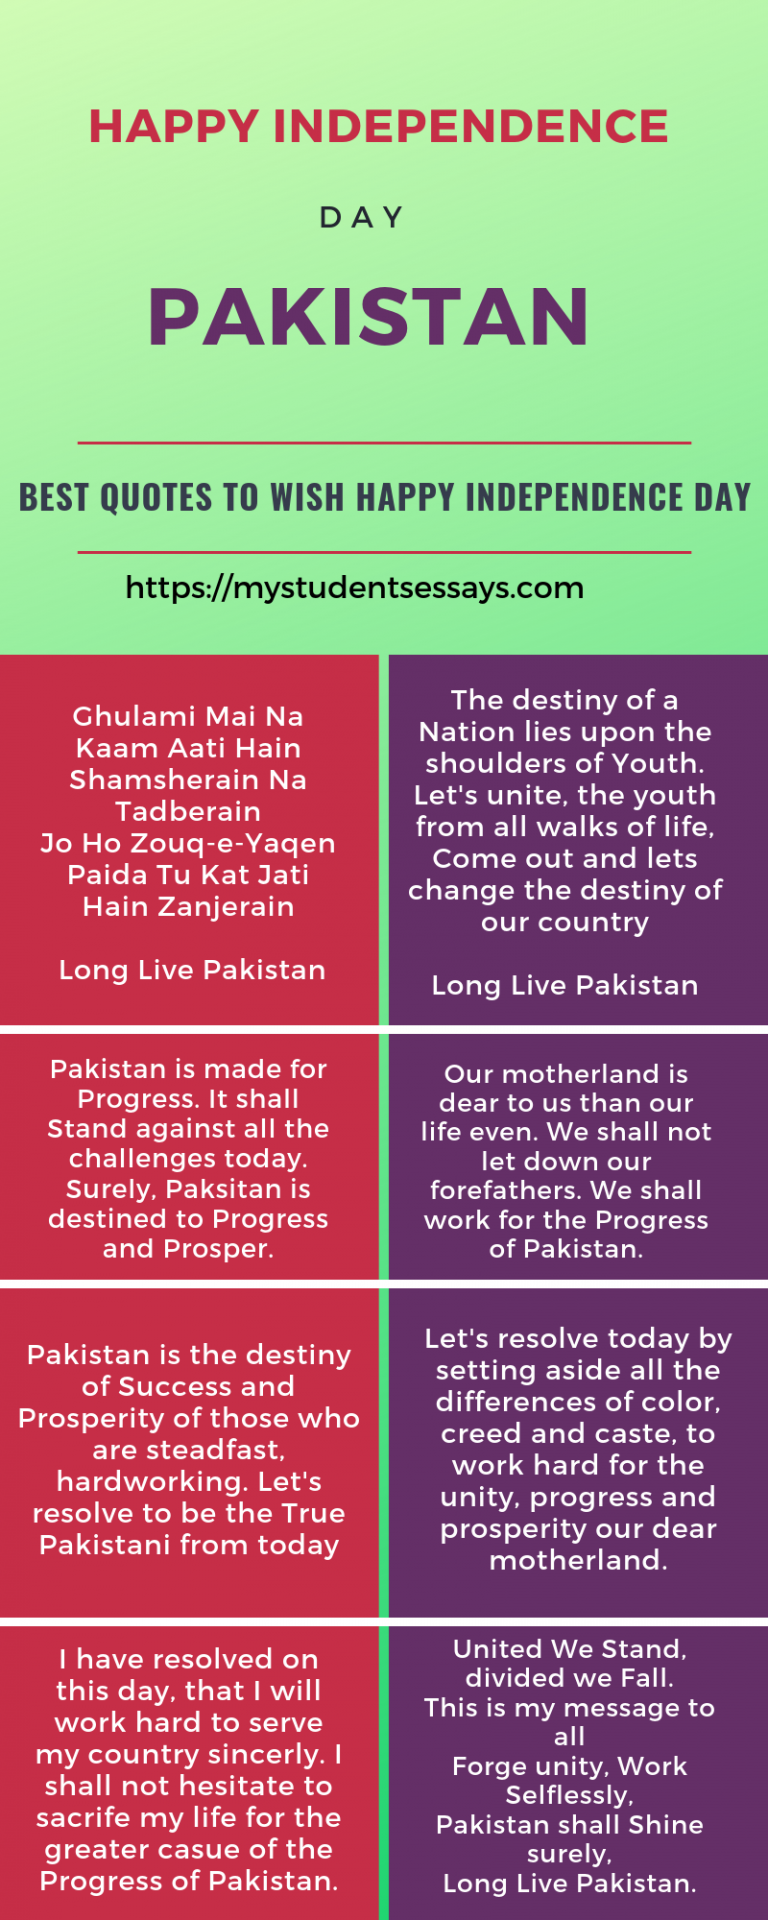 Best Awards Winning Speeches on Independence Day Pakistan 2020